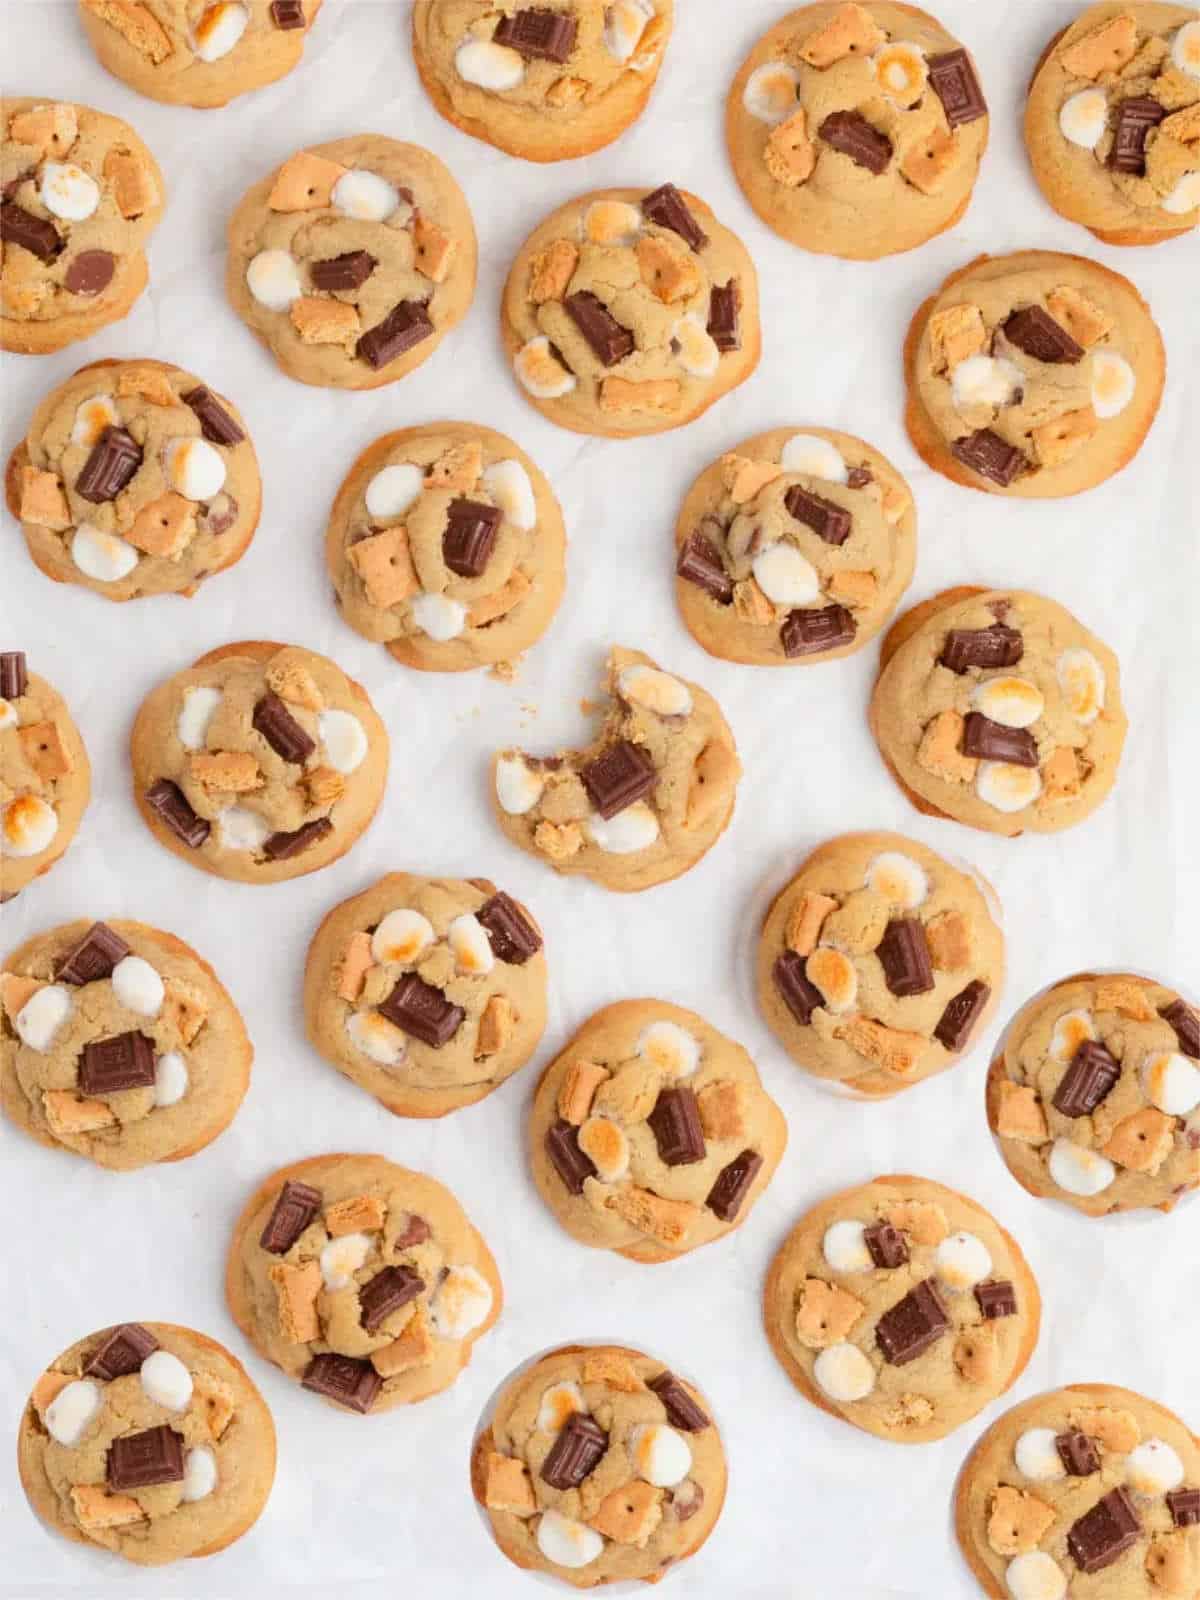 summer favorites: s'more's cookies.